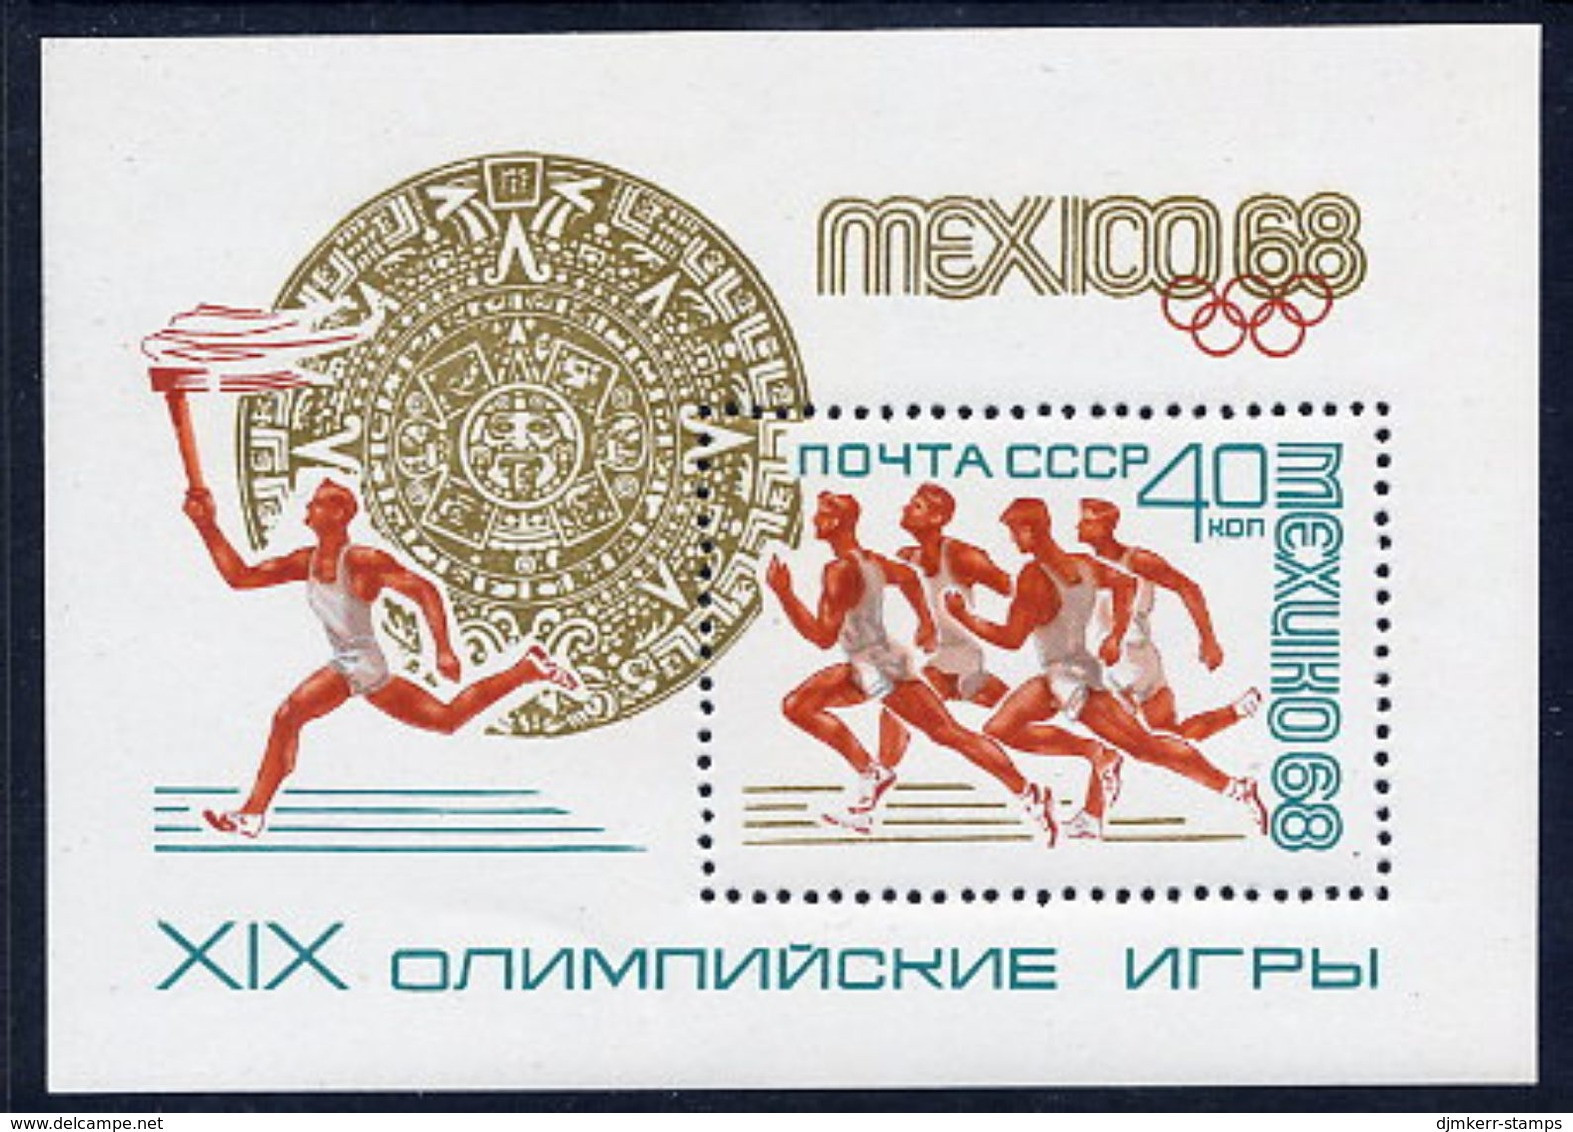 SOVIET UNION 1968 Olympic Games Block MNH / **.  Michel Block 51 - Unused Stamps